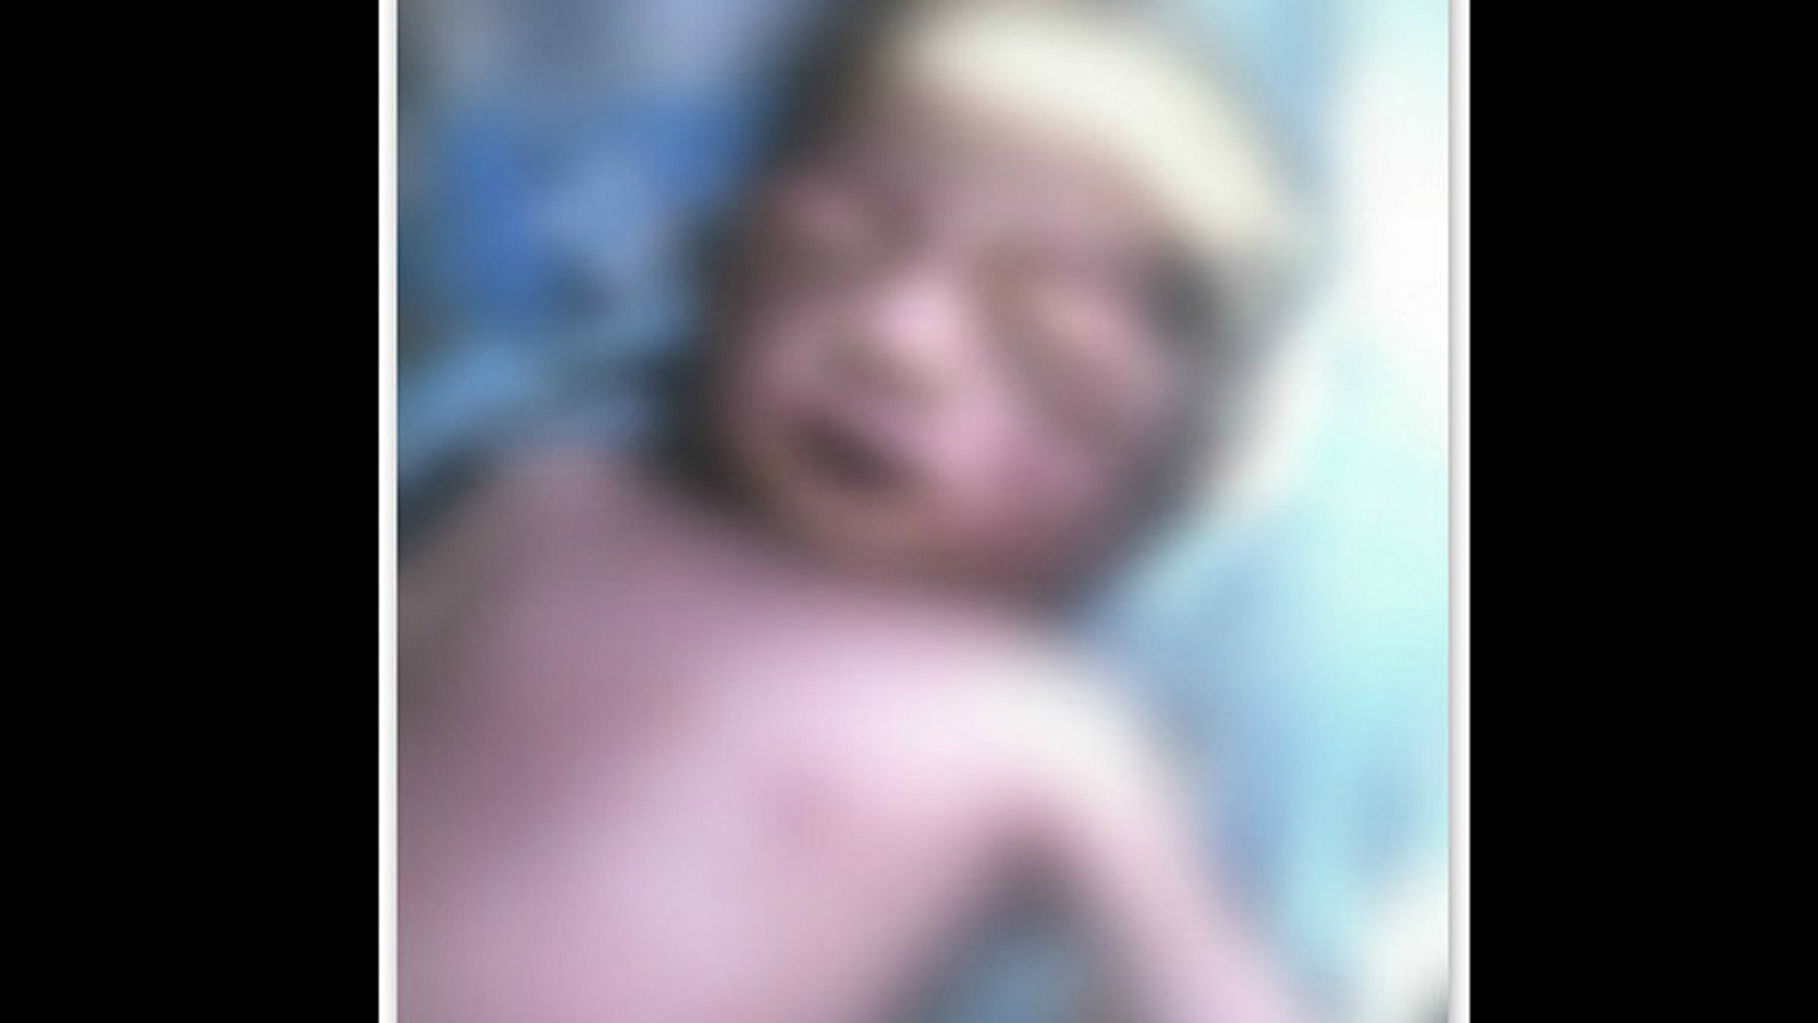 Injury marks were found on the baby’s body. (Photo Courtesy: <i>The News Minute</i>)